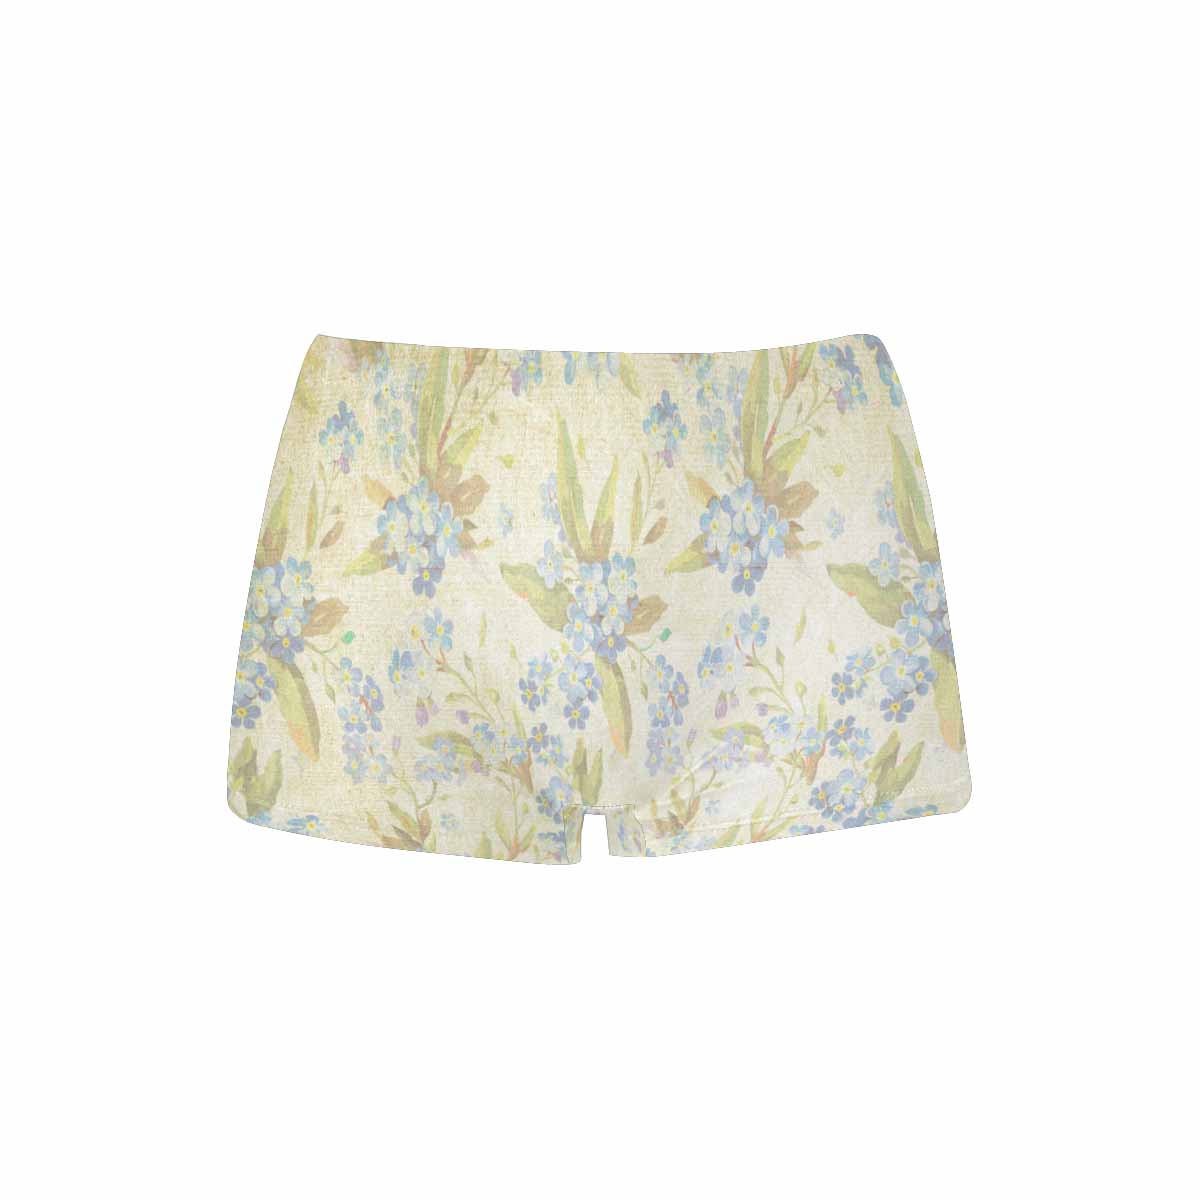 Floral 2, boyshorts, daisy dukes, pum pum shorts, panties, design 17